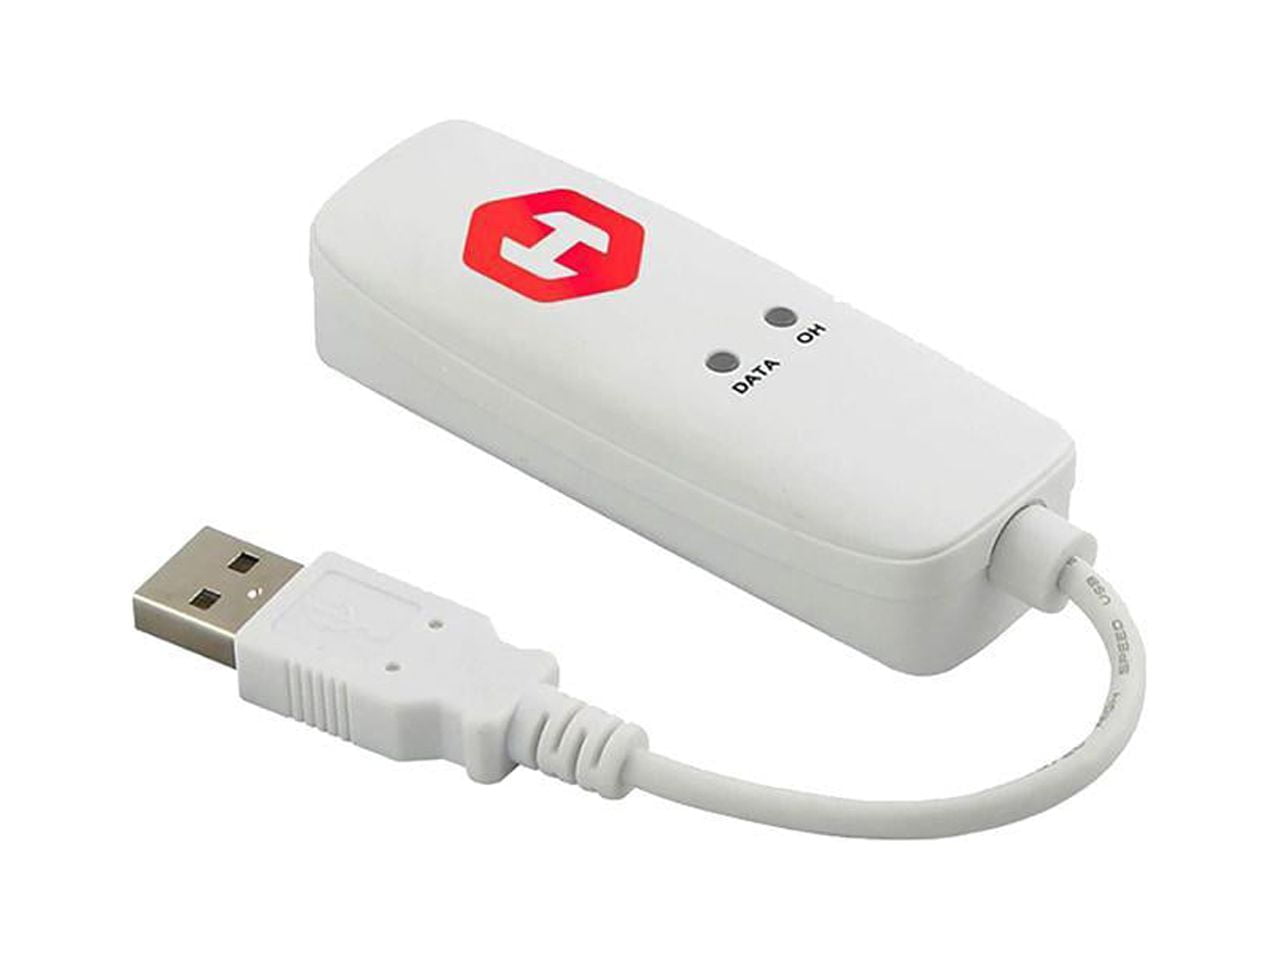 Picture of Hiro H50353 AC V92 56K USB Data Fax Dial Single Port Modem